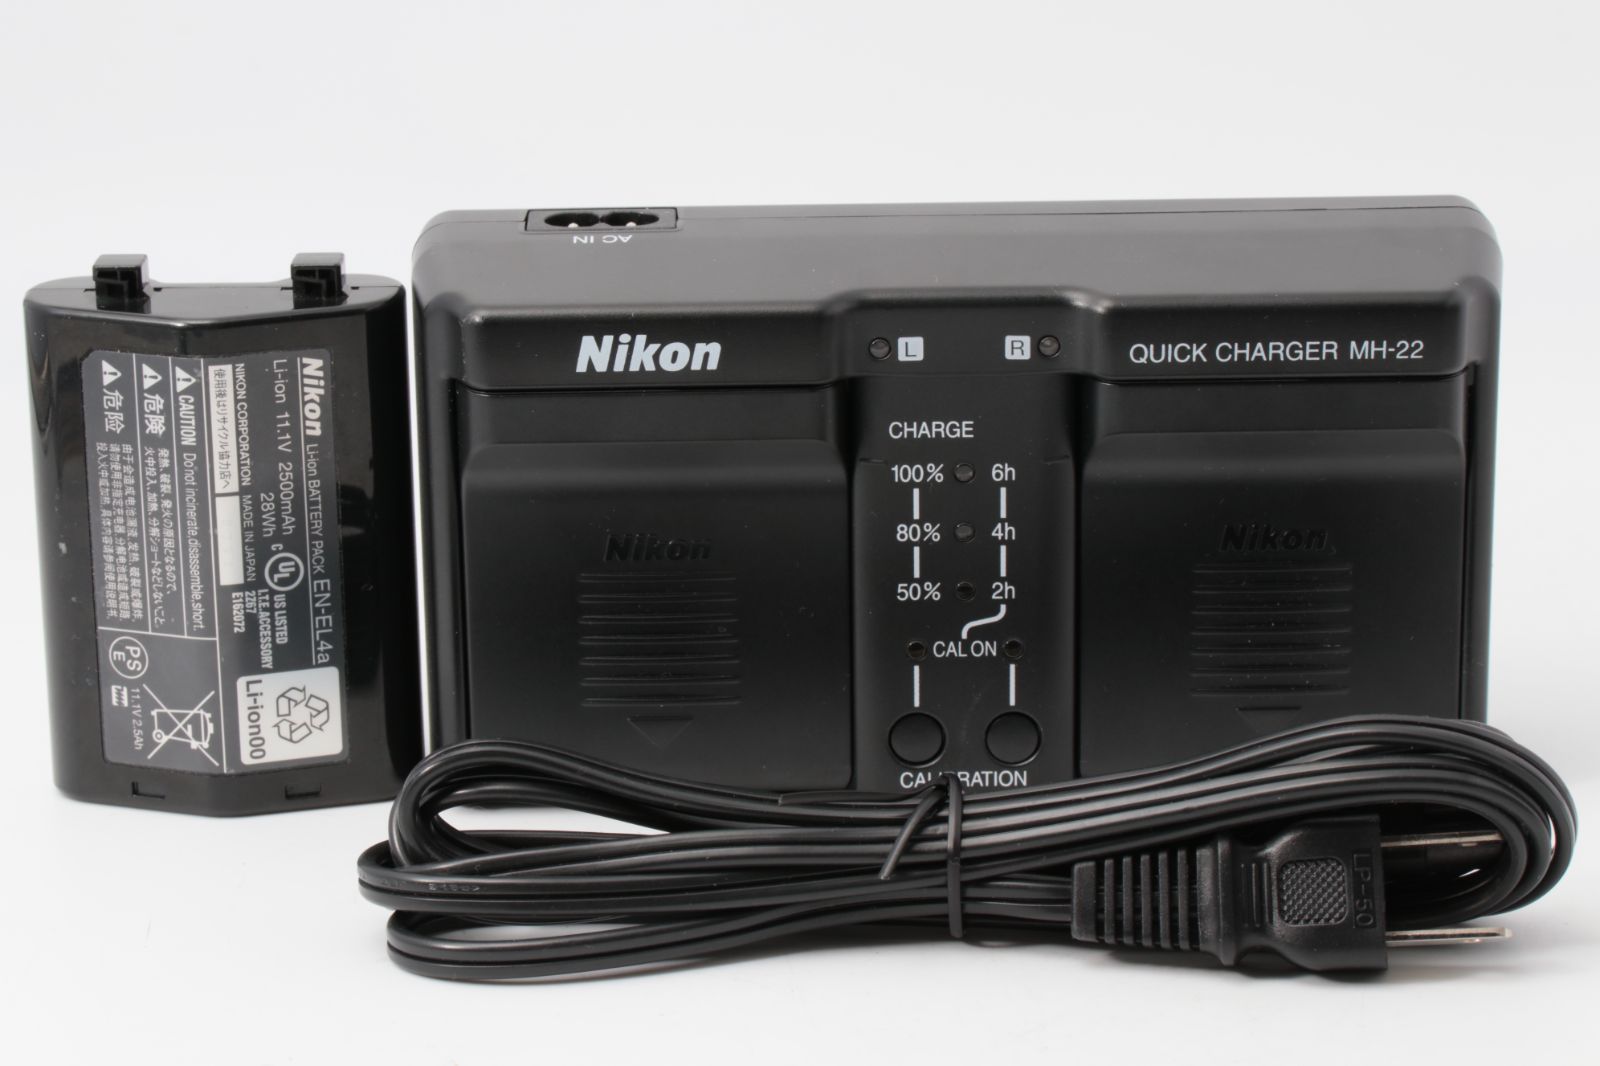 Nikon QUICK CHARGER MH-22 + EN-EL 4a セット #740/038/21 - Vivid